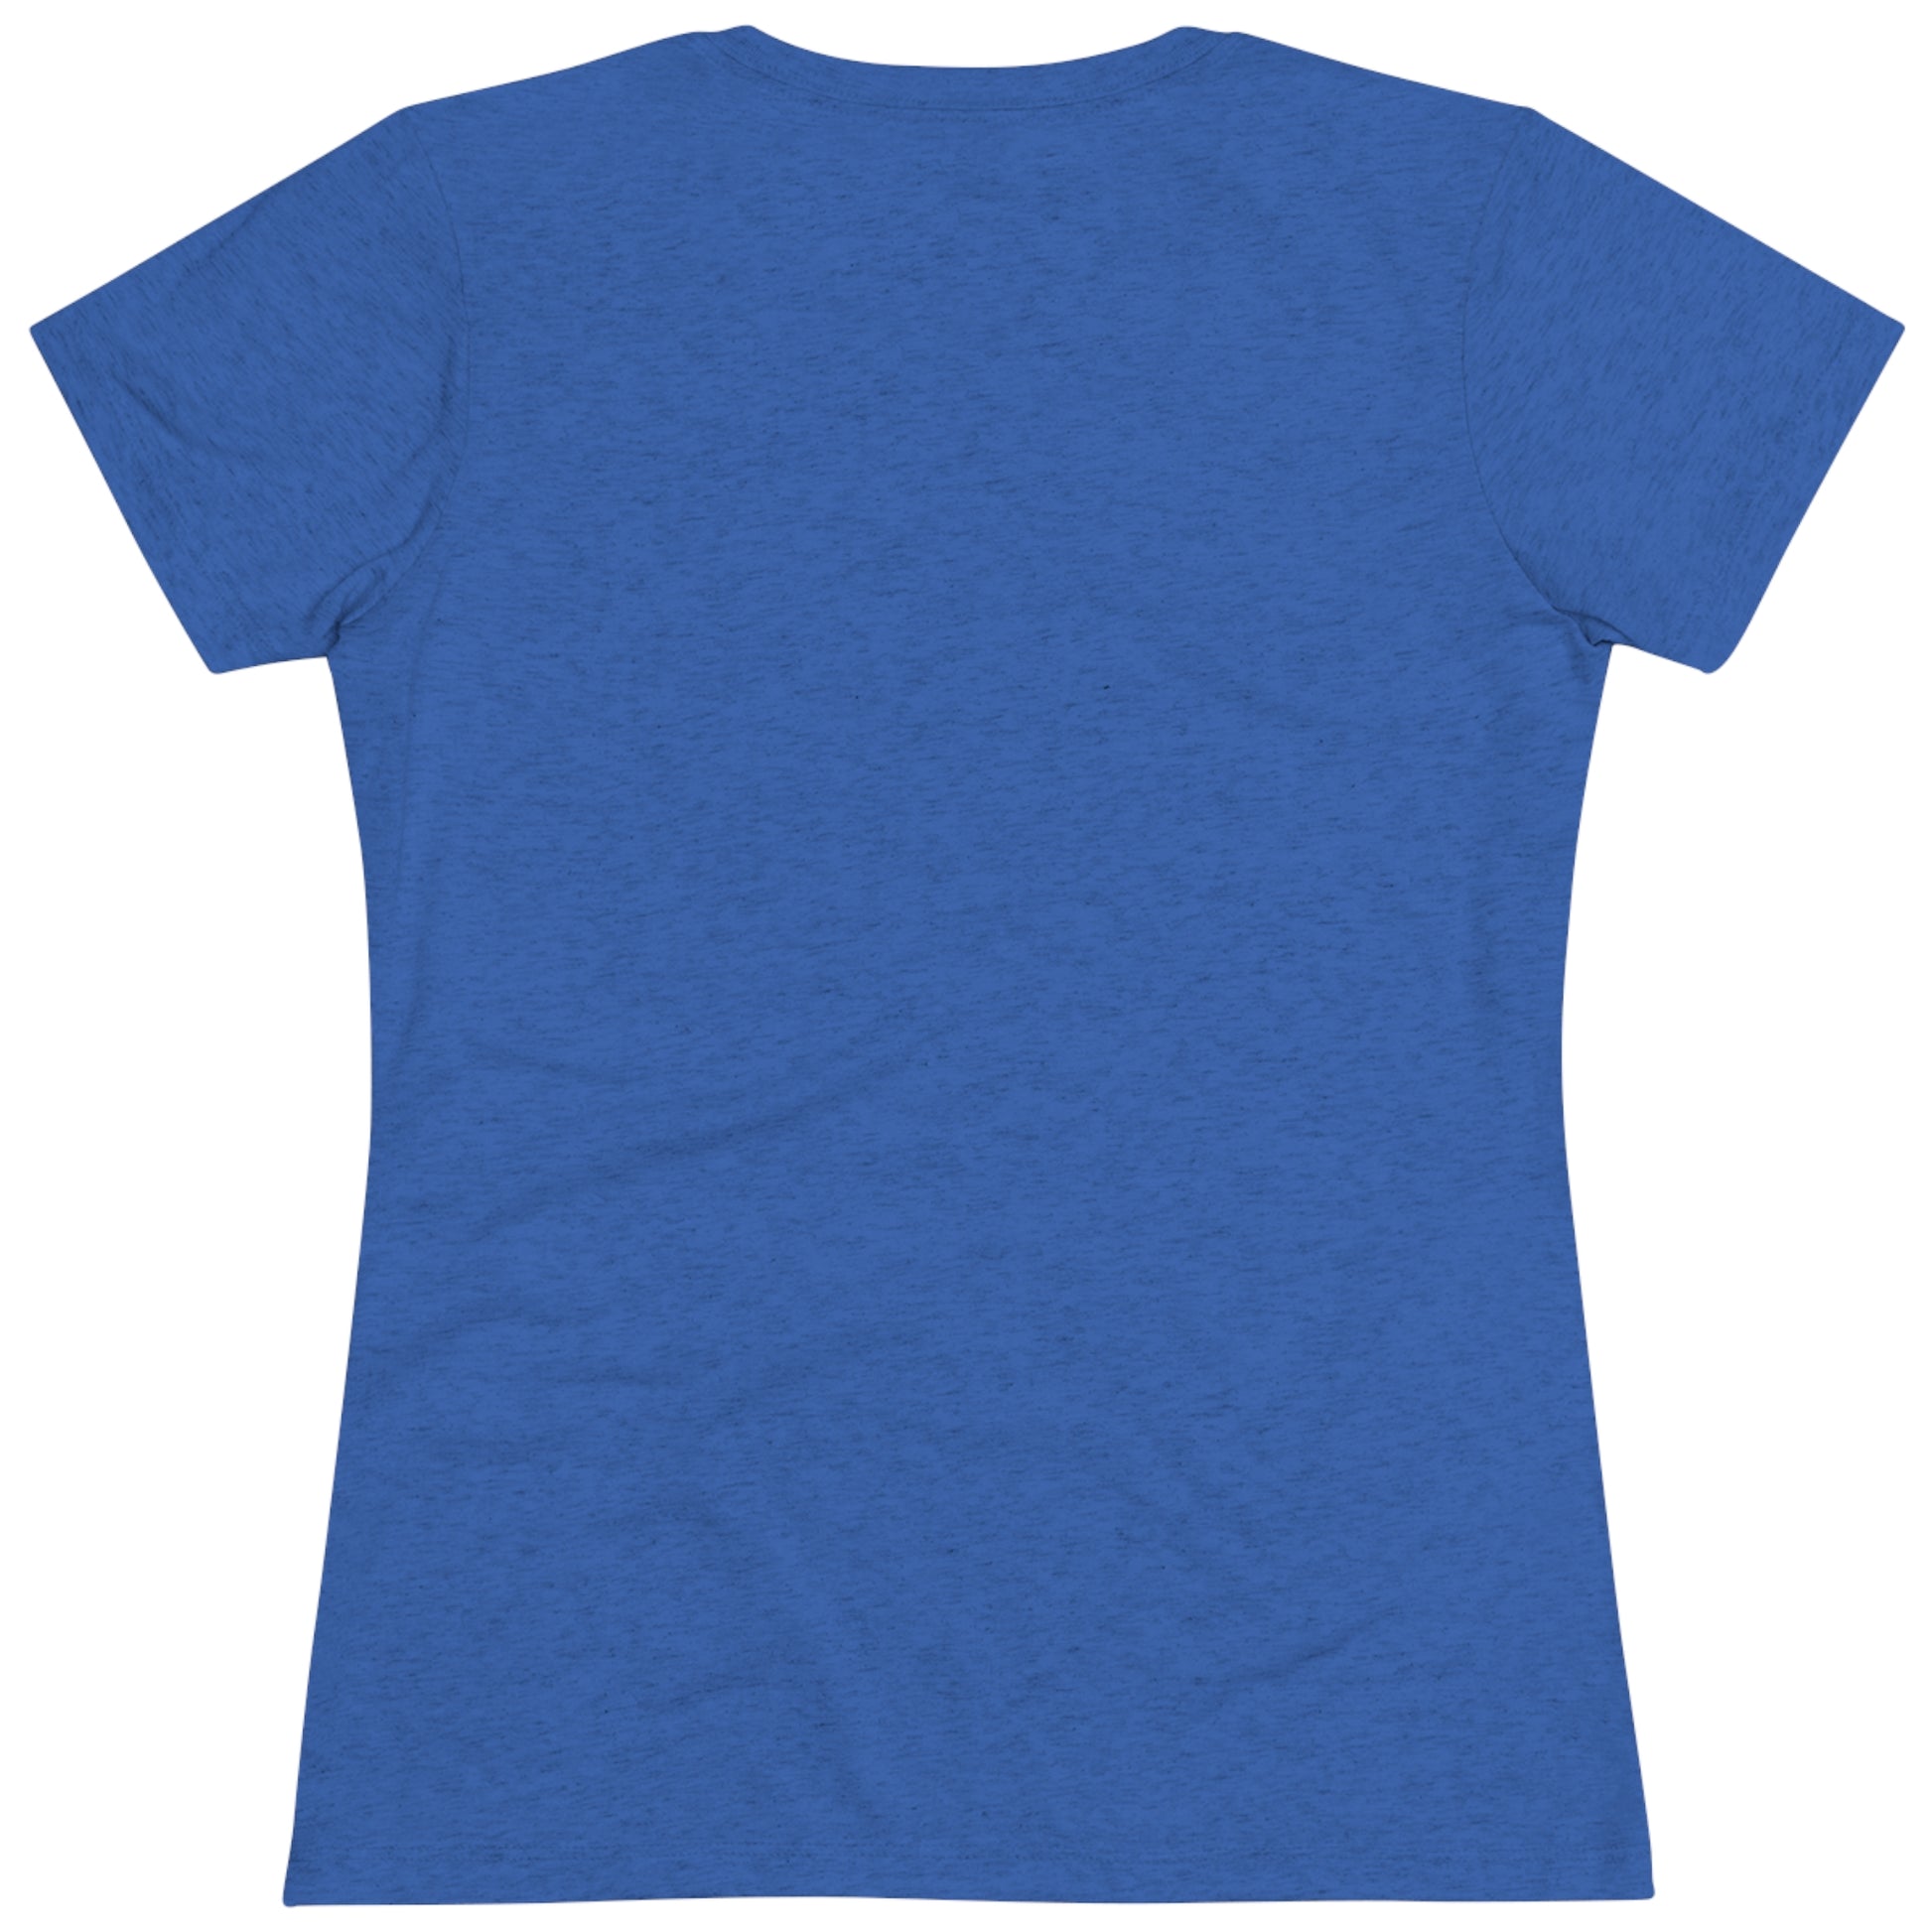 Women's "Utah Shape" T-Shirt - Utah.com